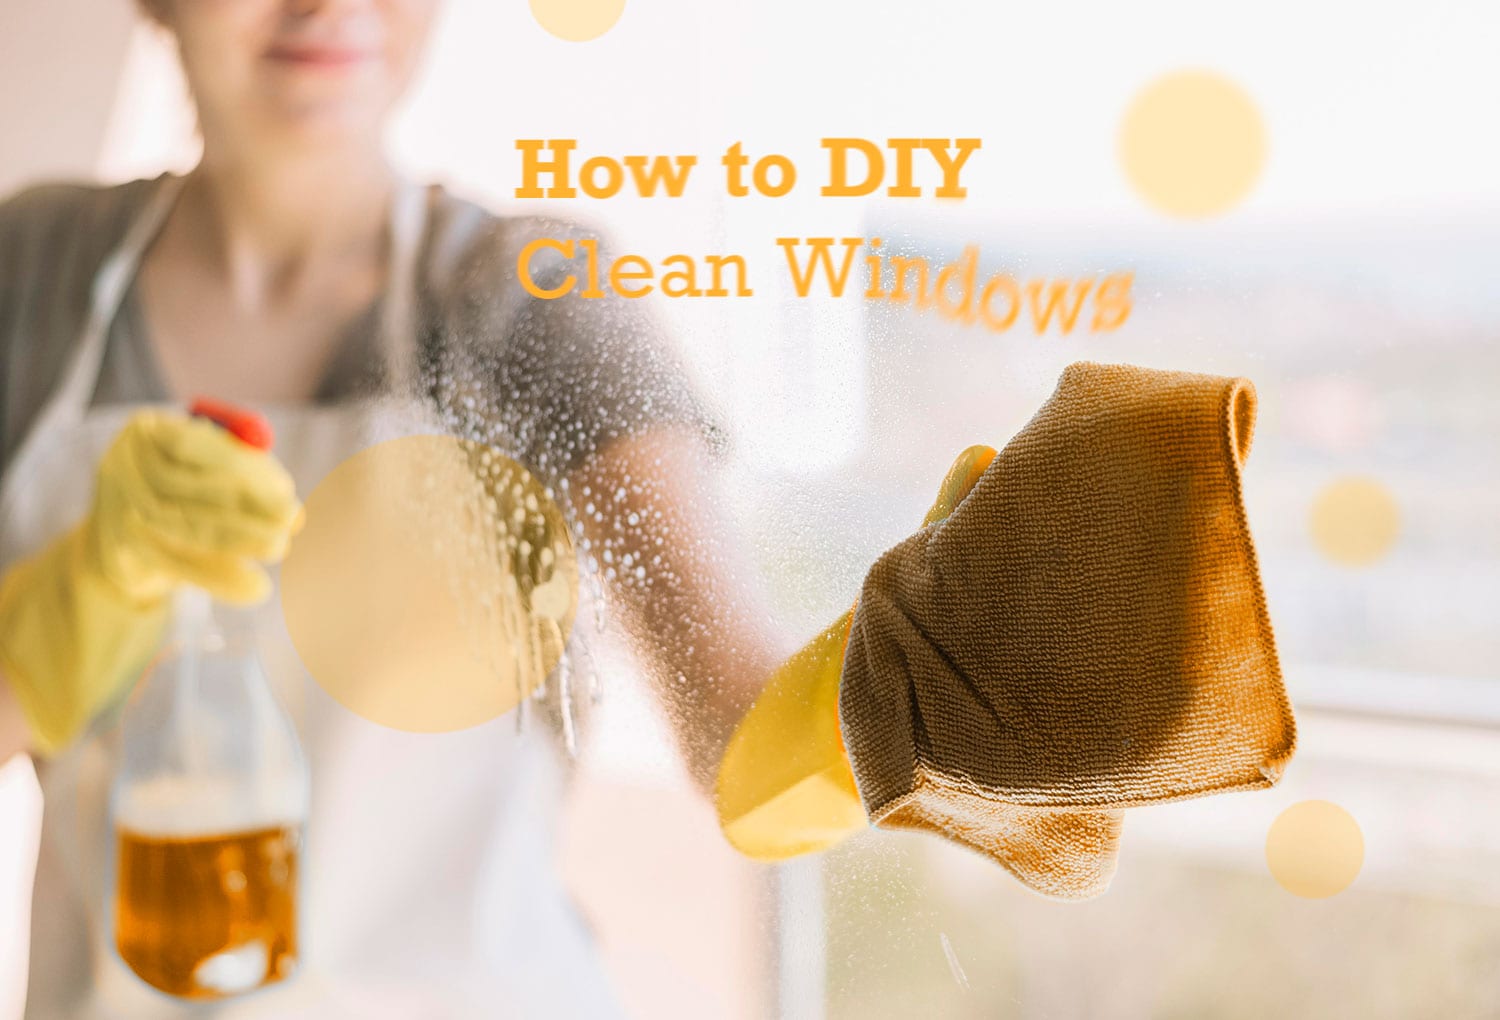 DIY Cleaning Window - Lady clean window